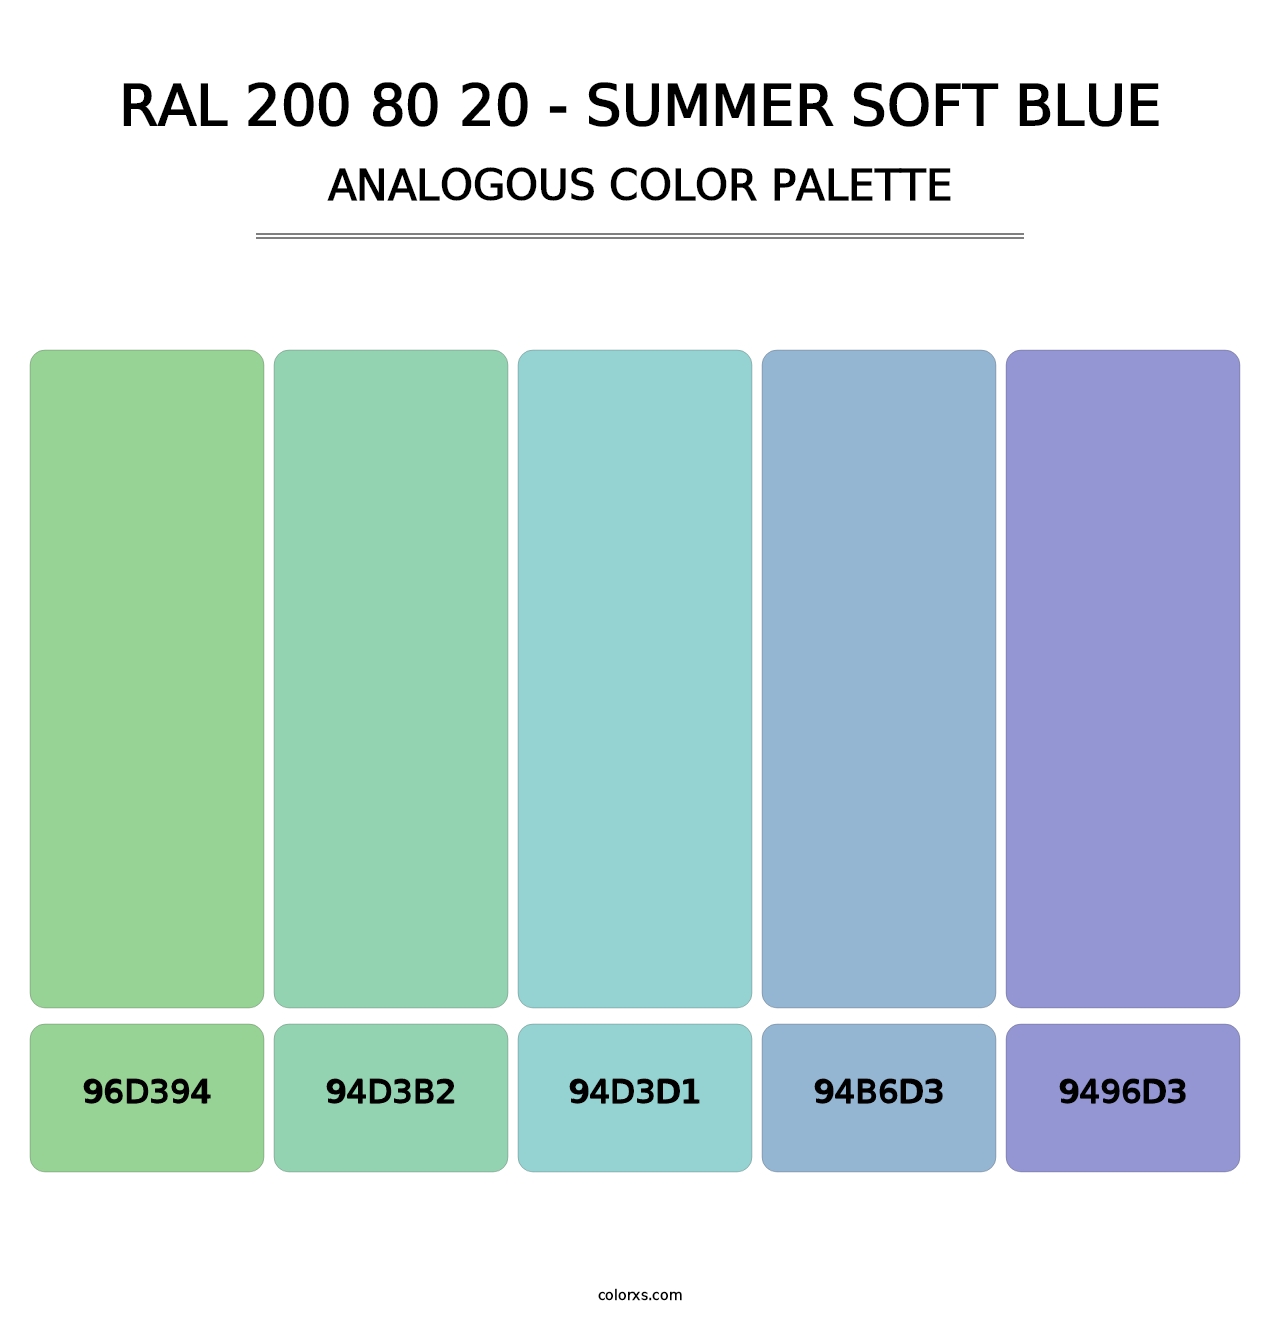 RAL 200 80 20 - Summer Soft Blue - Analogous Color Palette